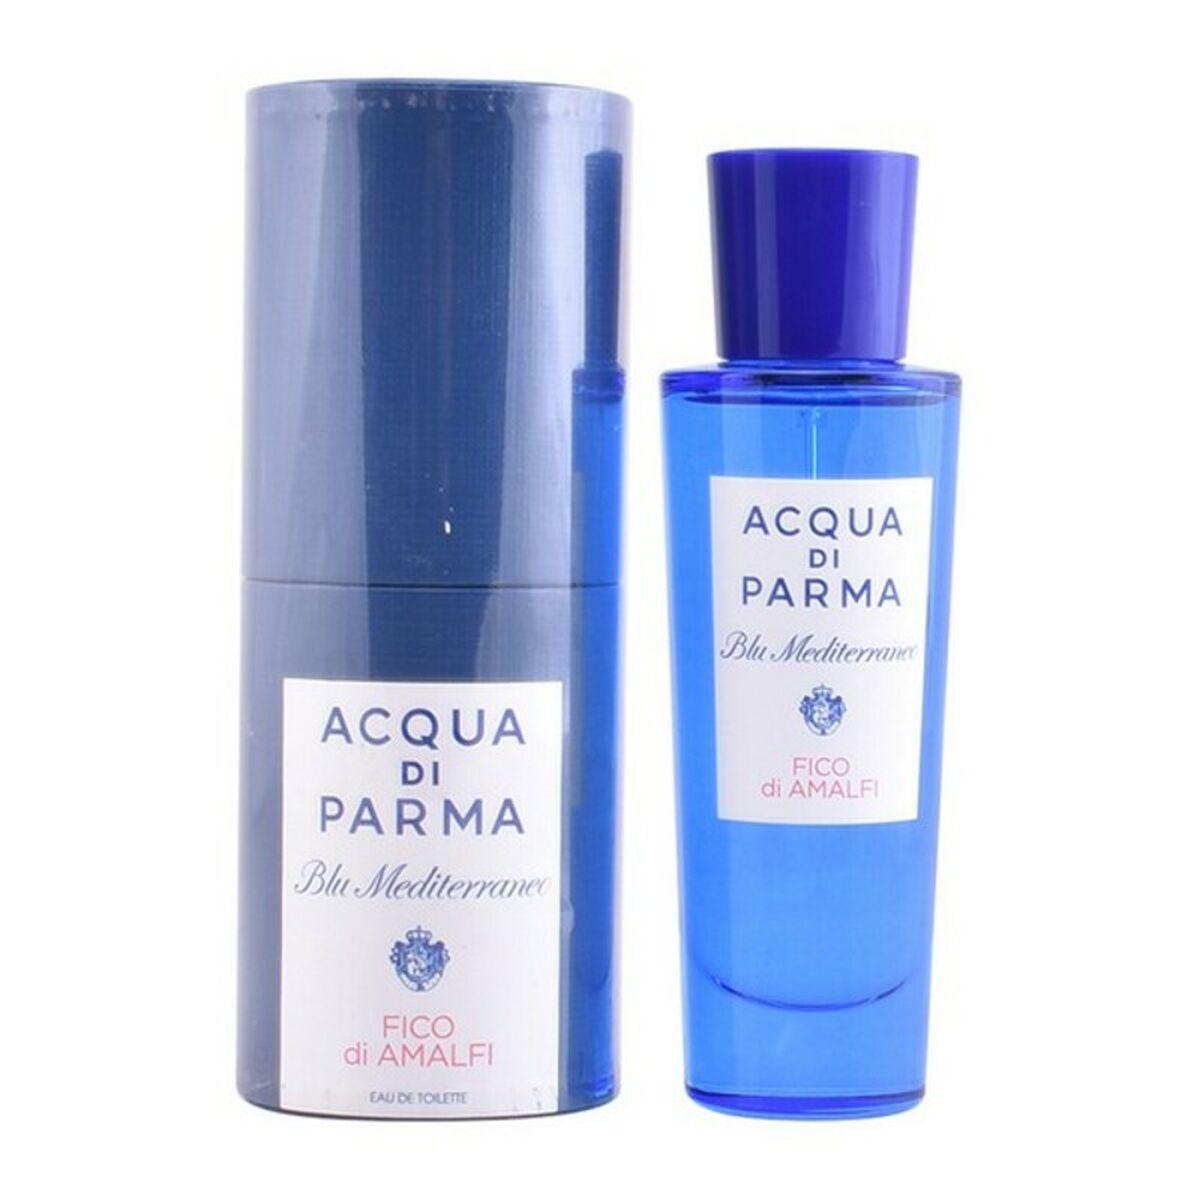 Unisex parfume Acqua Di Parma EDT Blu Mediterraneo Fico di Amalfi (30 ml)